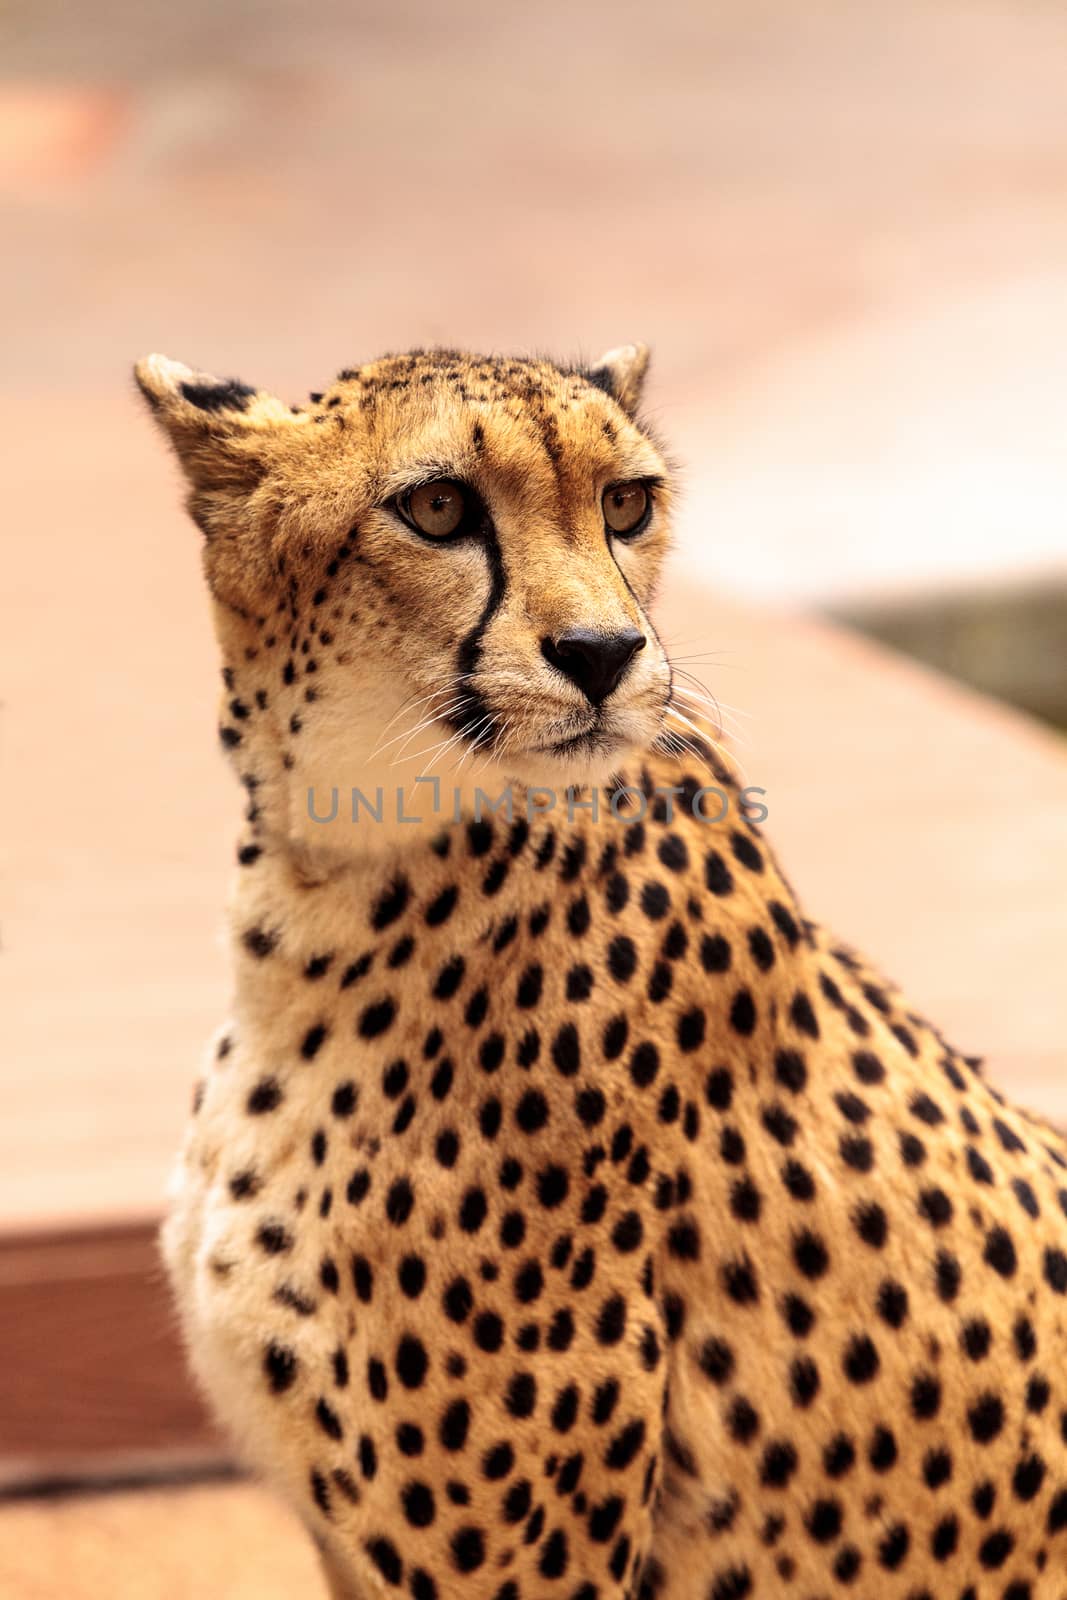 Beautiful spotted cheetah Acinonyx jubatus stands alert and watchful.